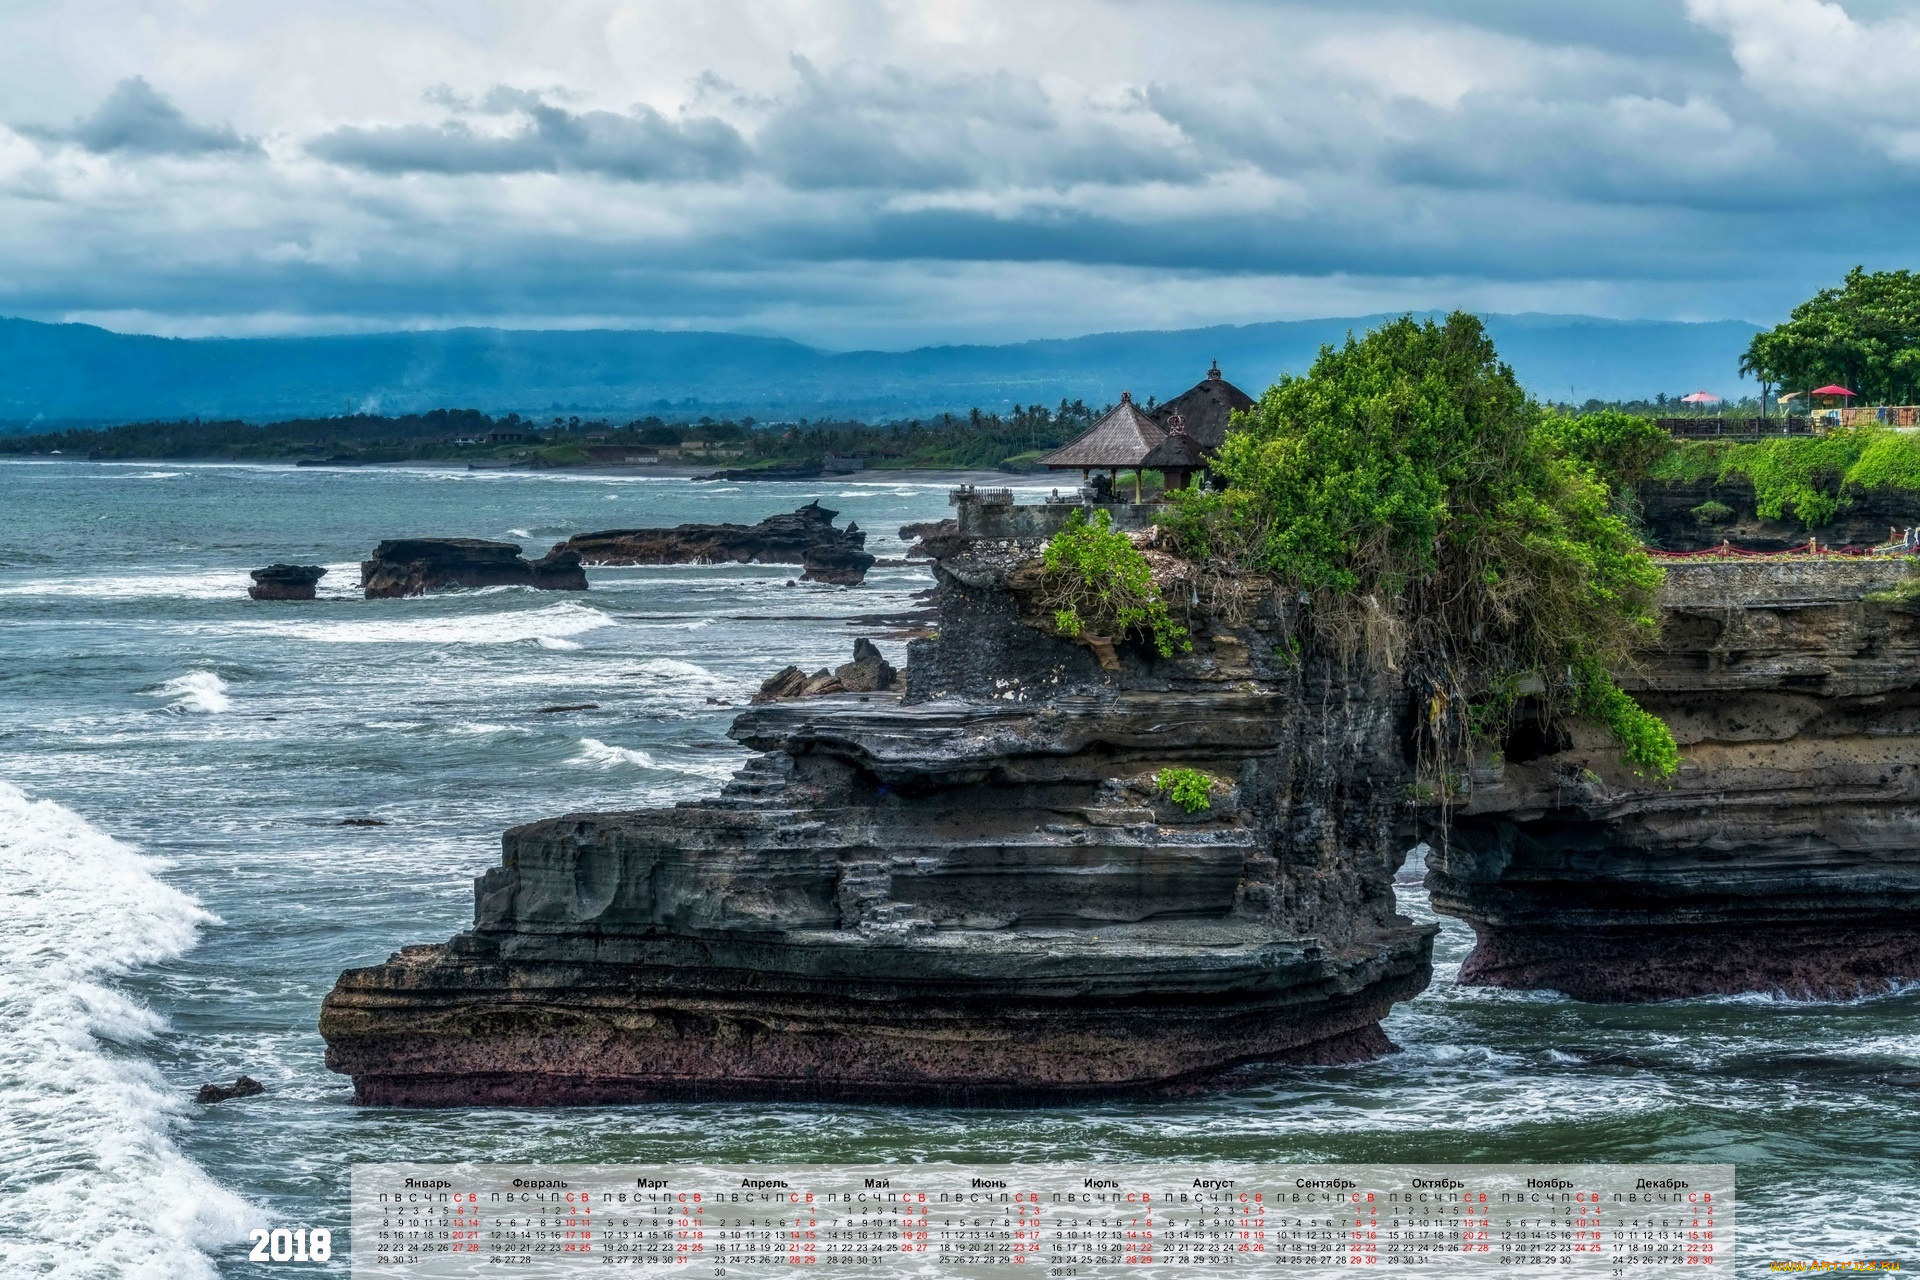 indonesia, календари, природа, 2018, водоем, беседка, растения, облака